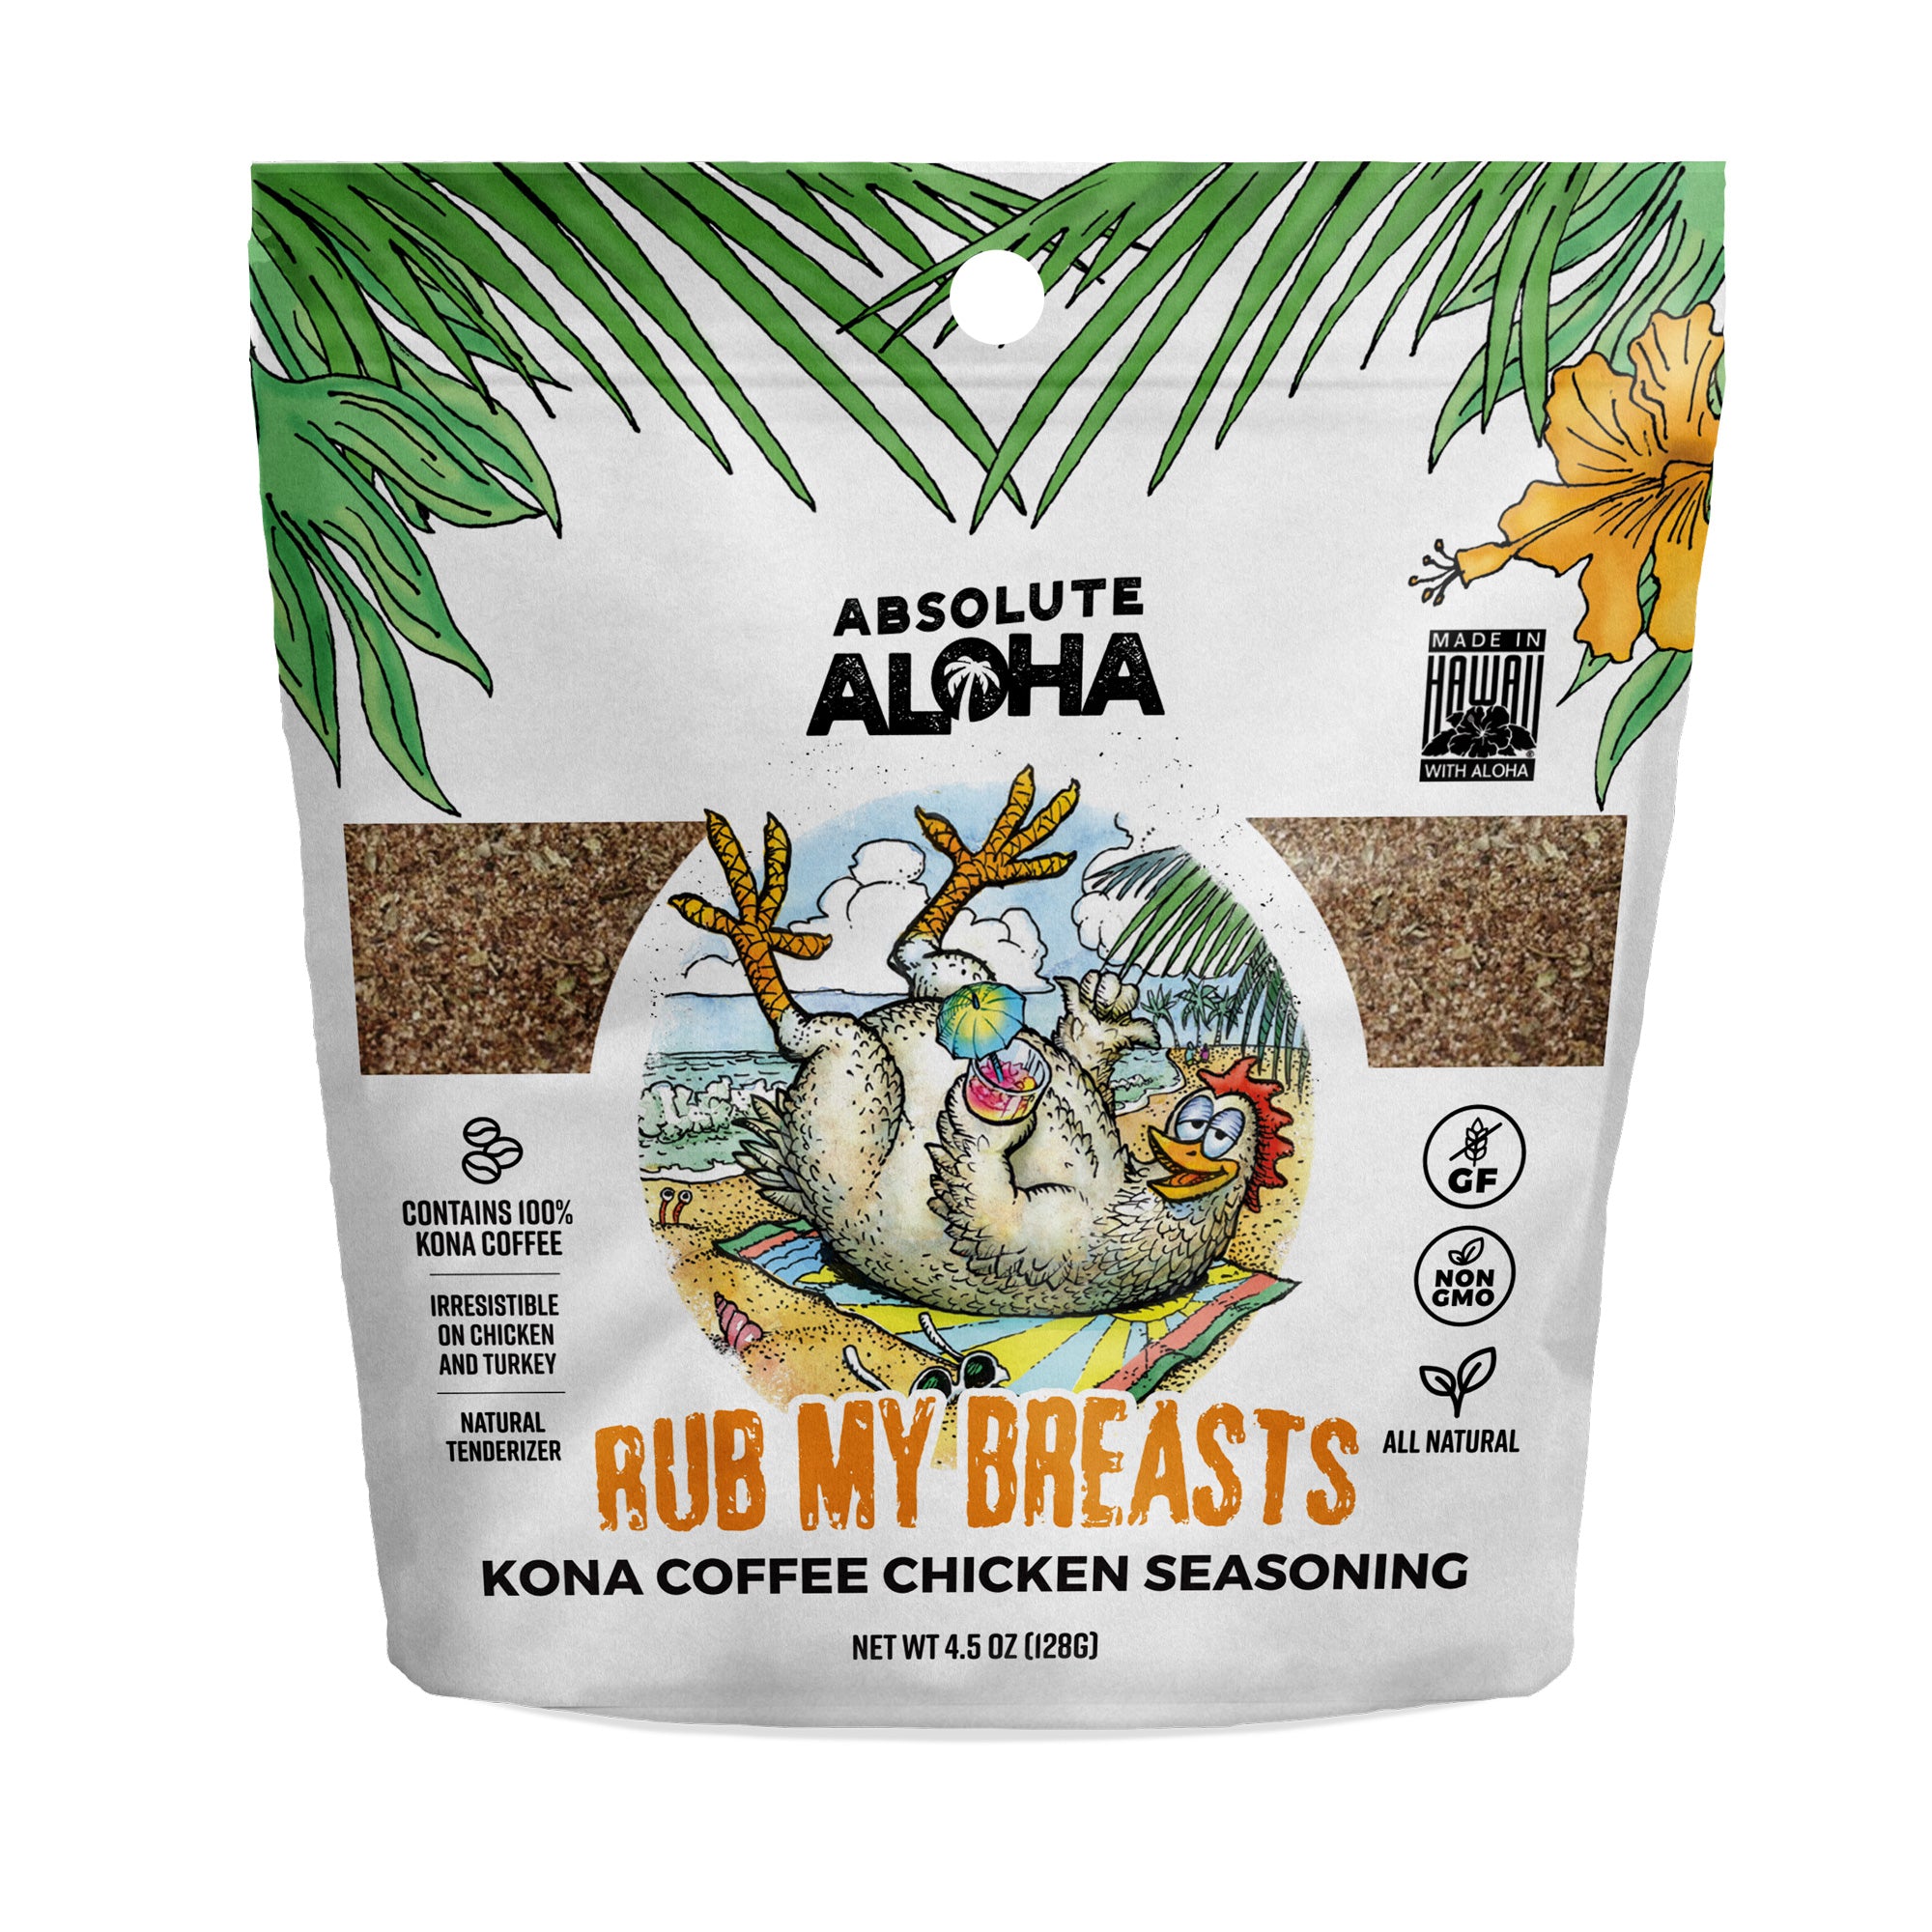 Absolute Aloha Rub My Breasts Kona Coffee Chicken Seasonings